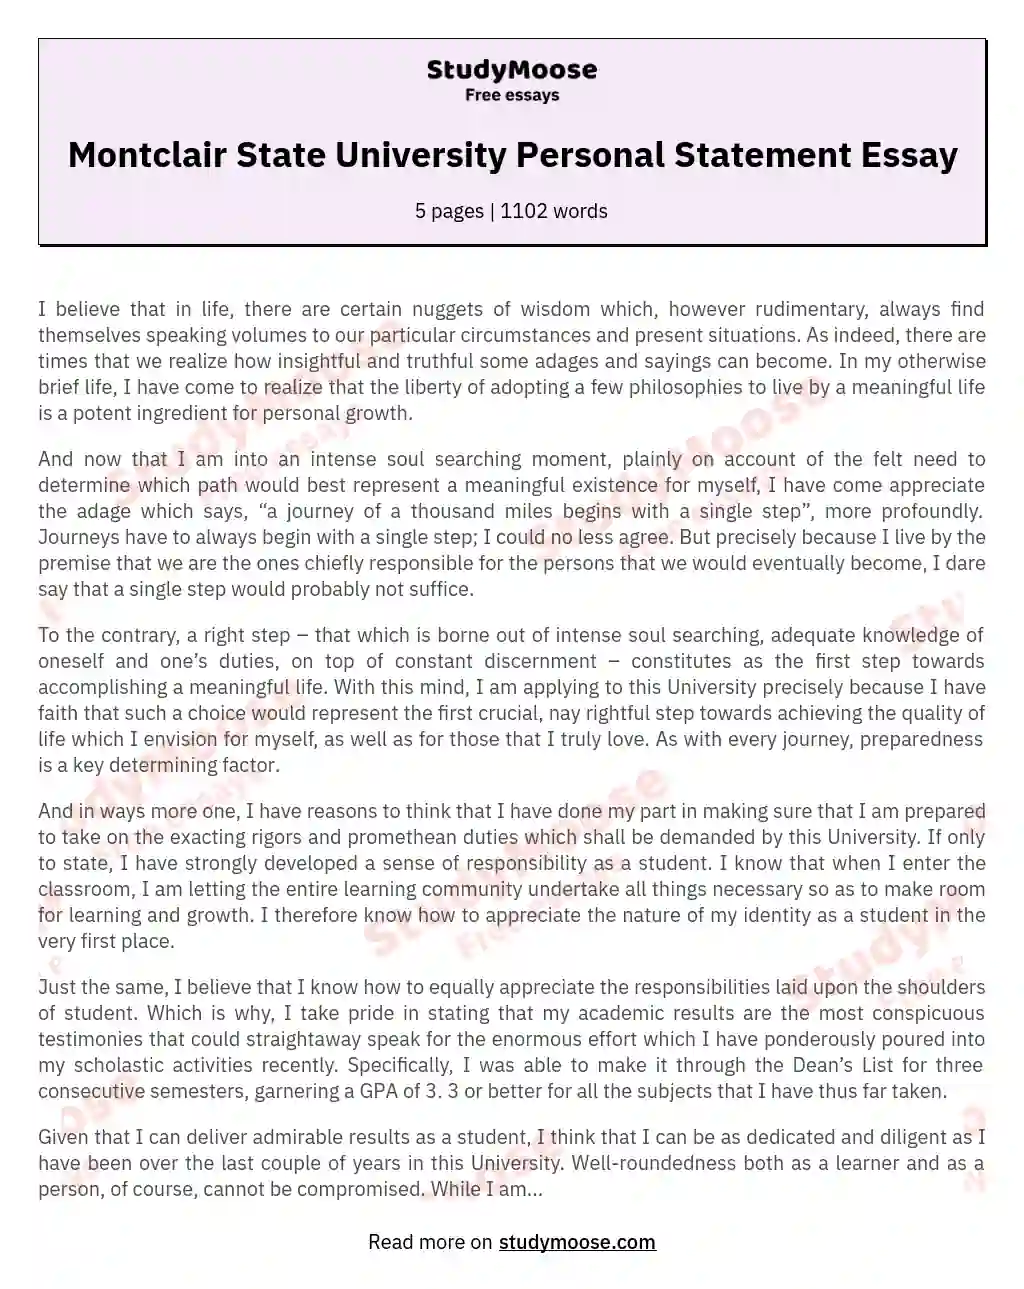 Montclair State University Personal Statement Essay essay